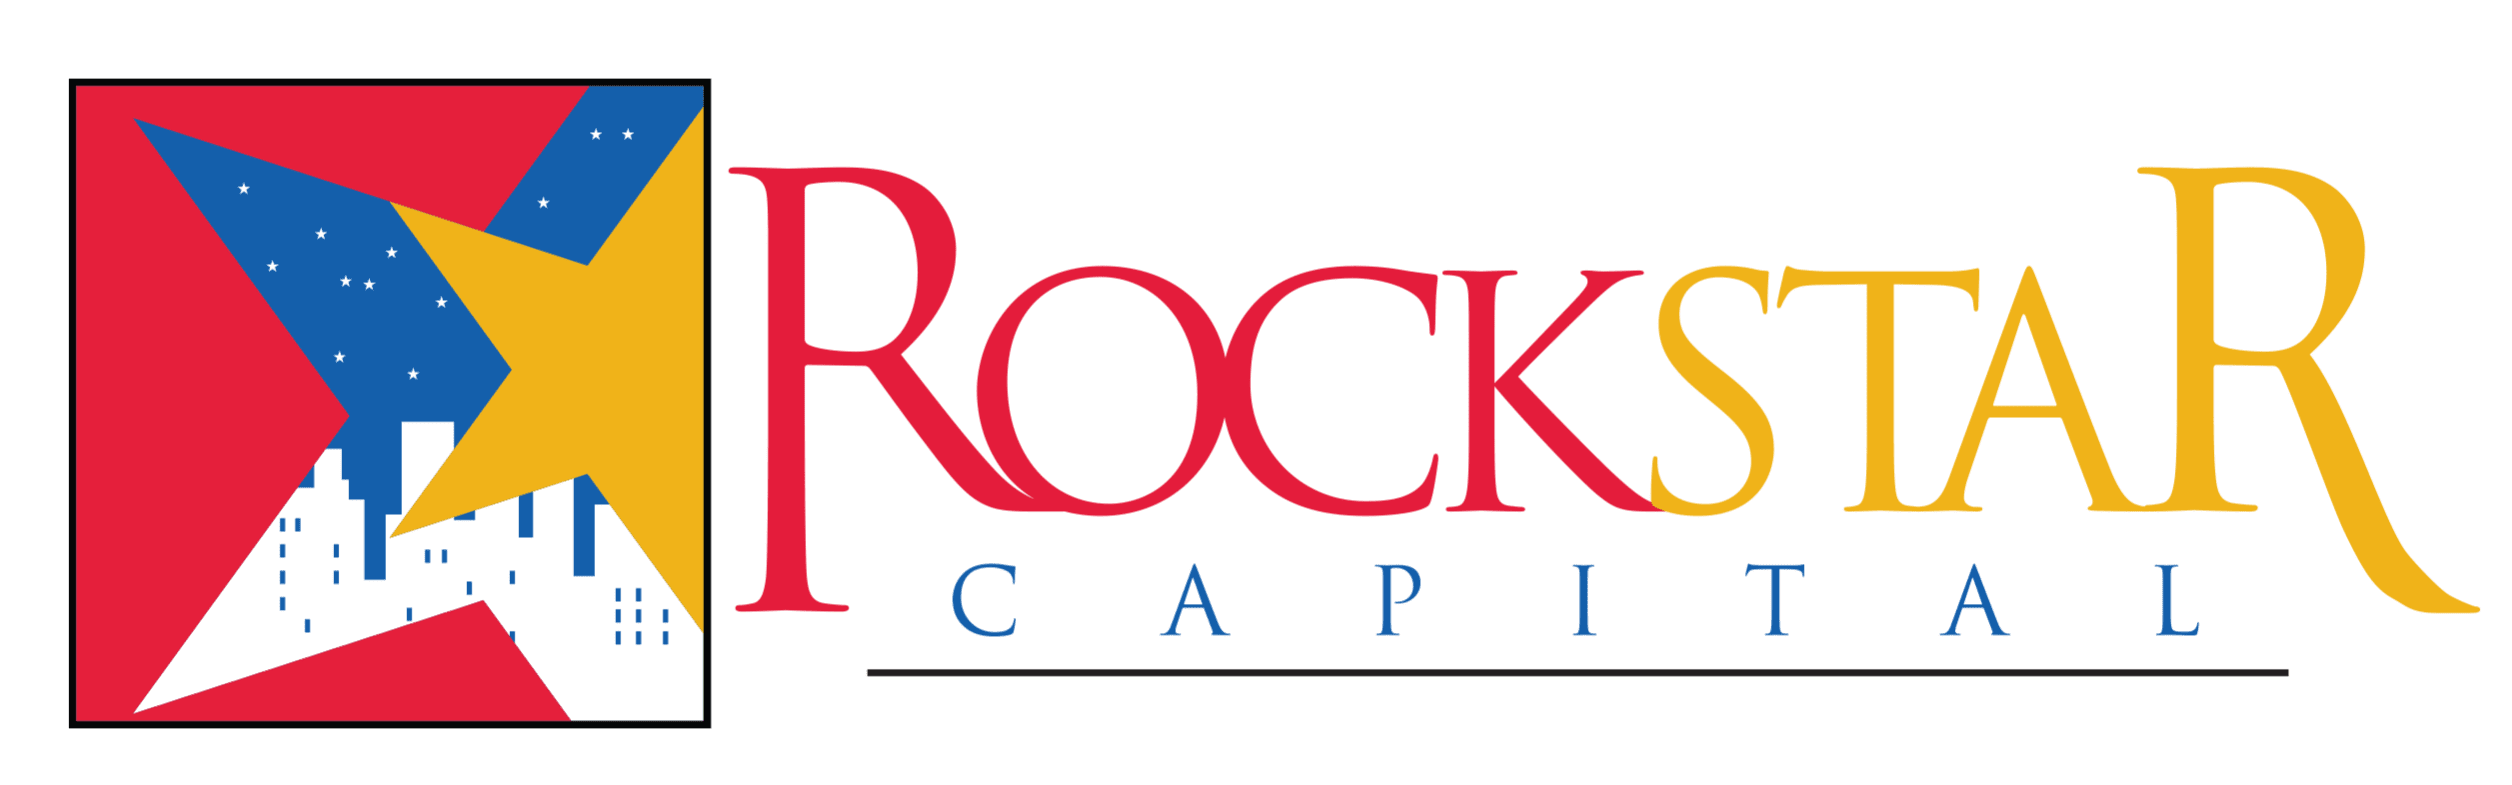 rockstar capital logo